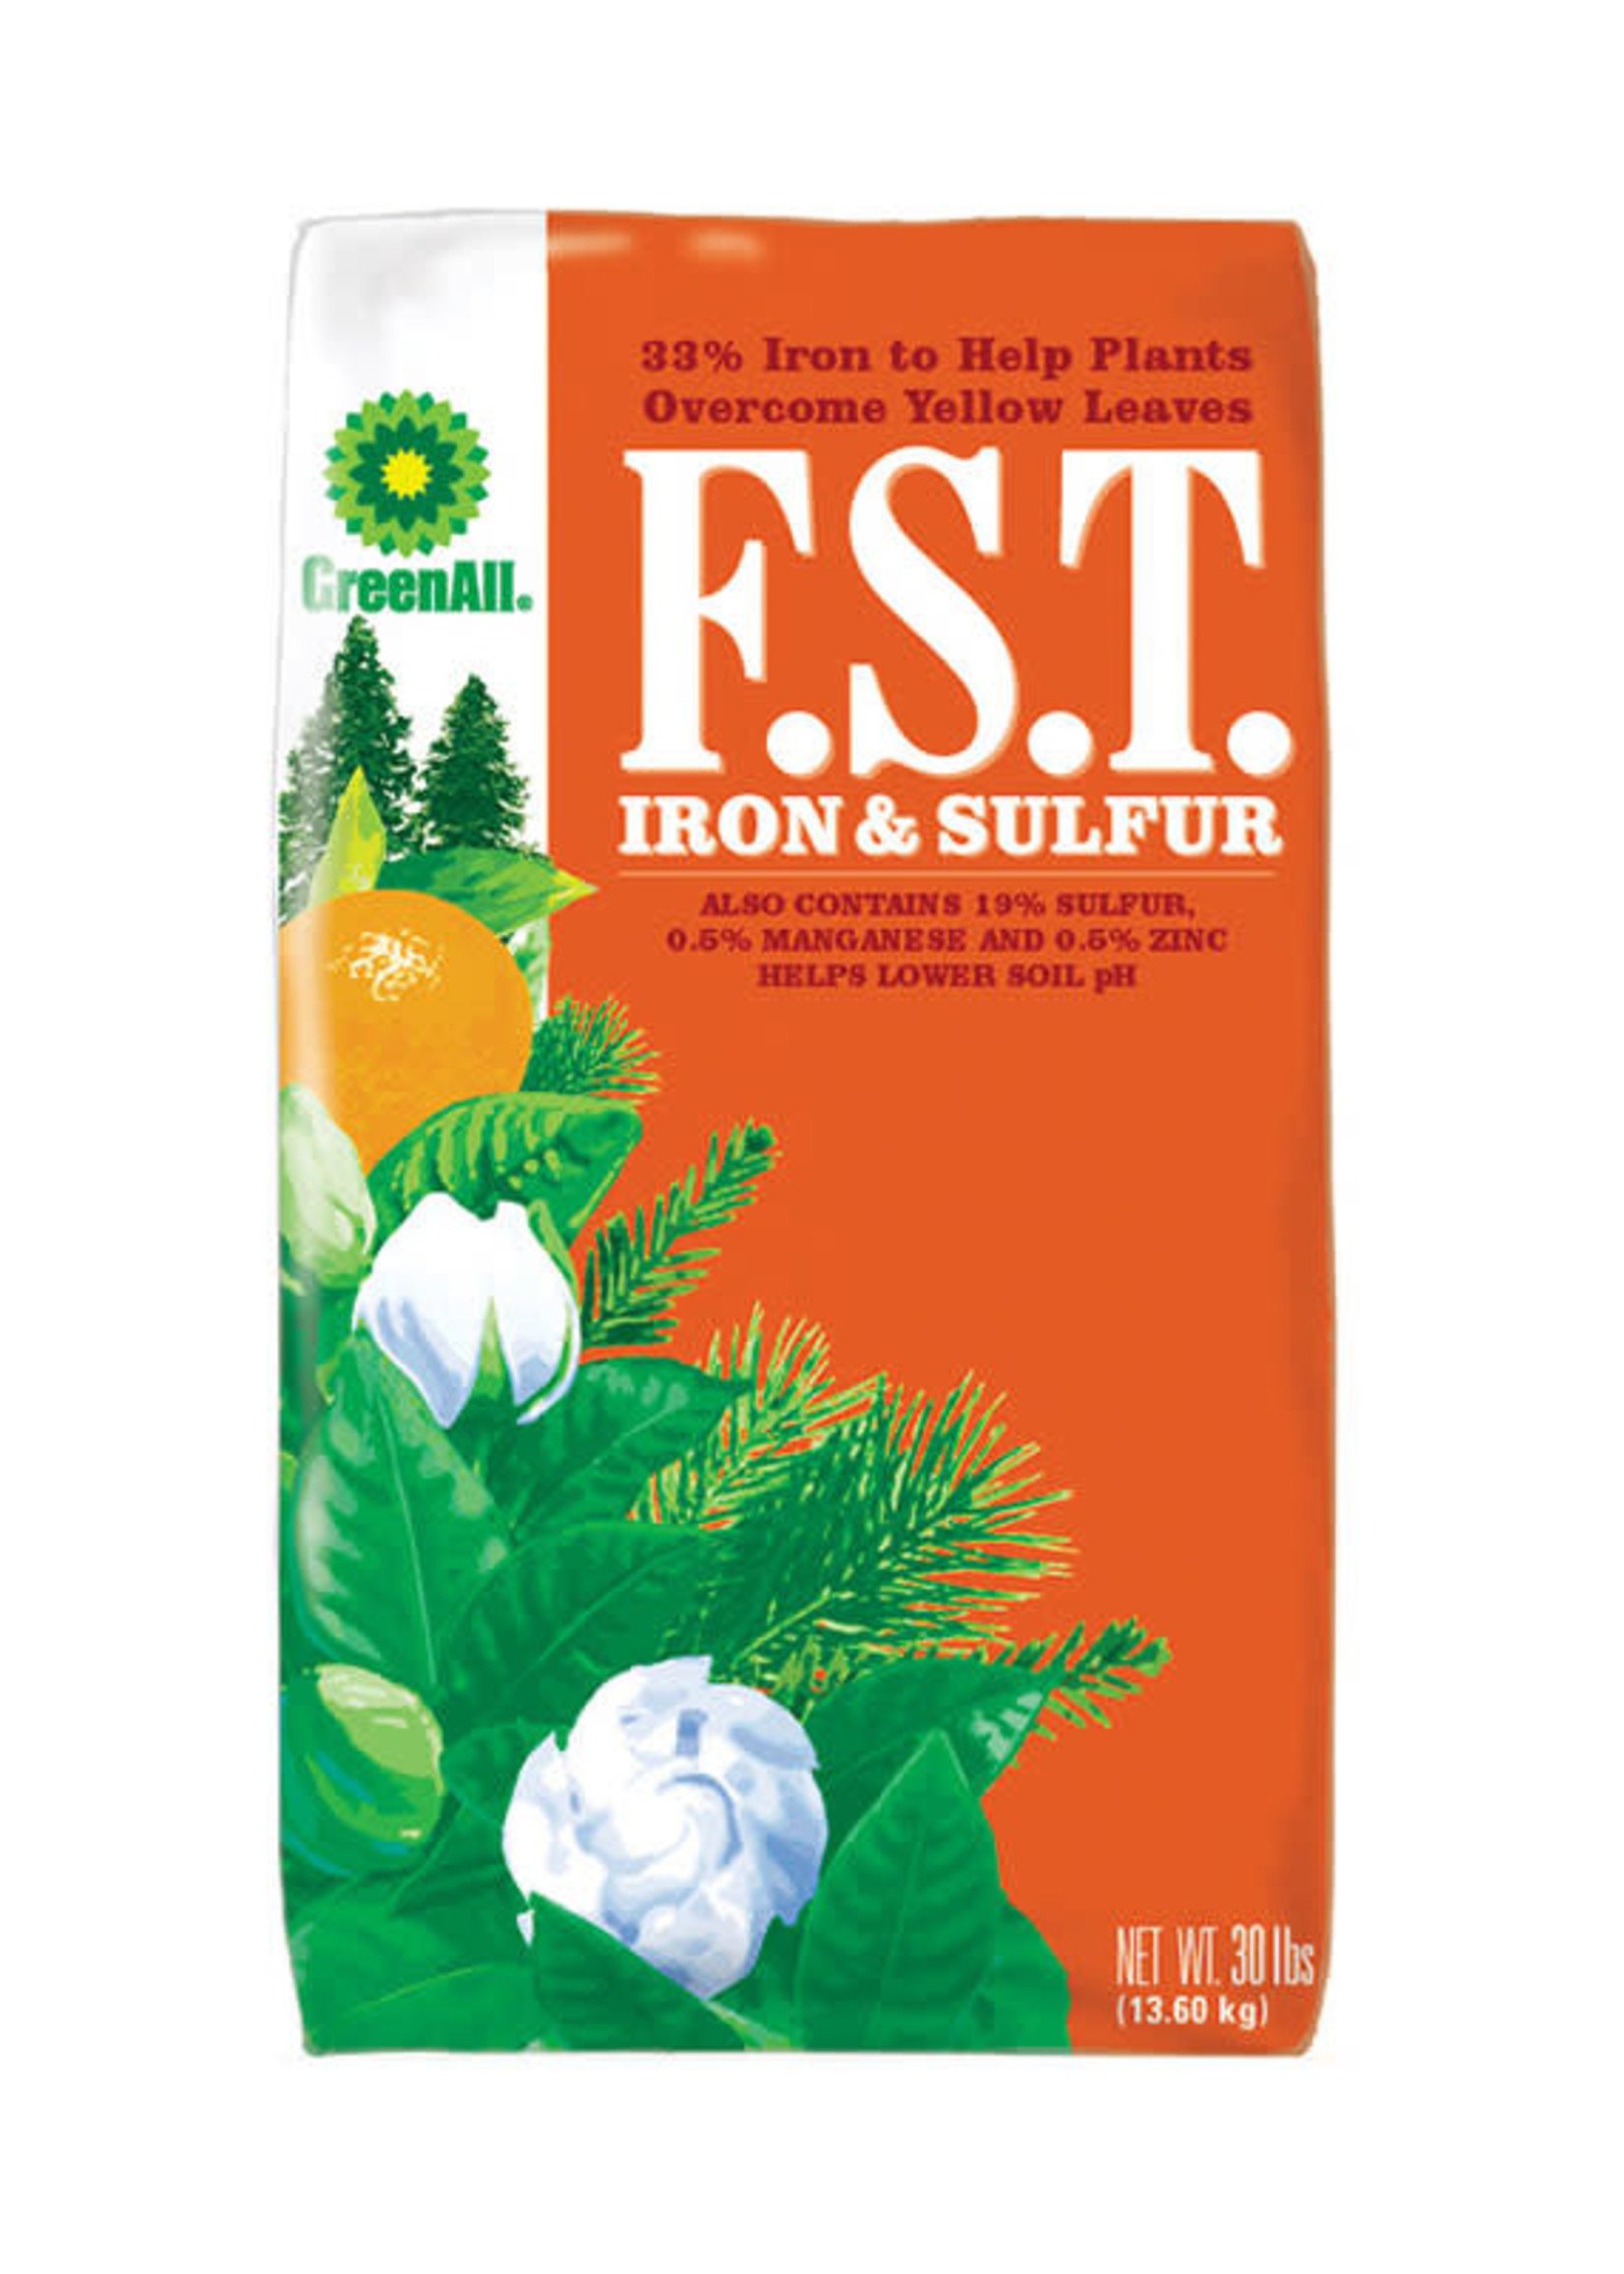 GreenAll GreenAll F.S.T. Iron & Sulfur